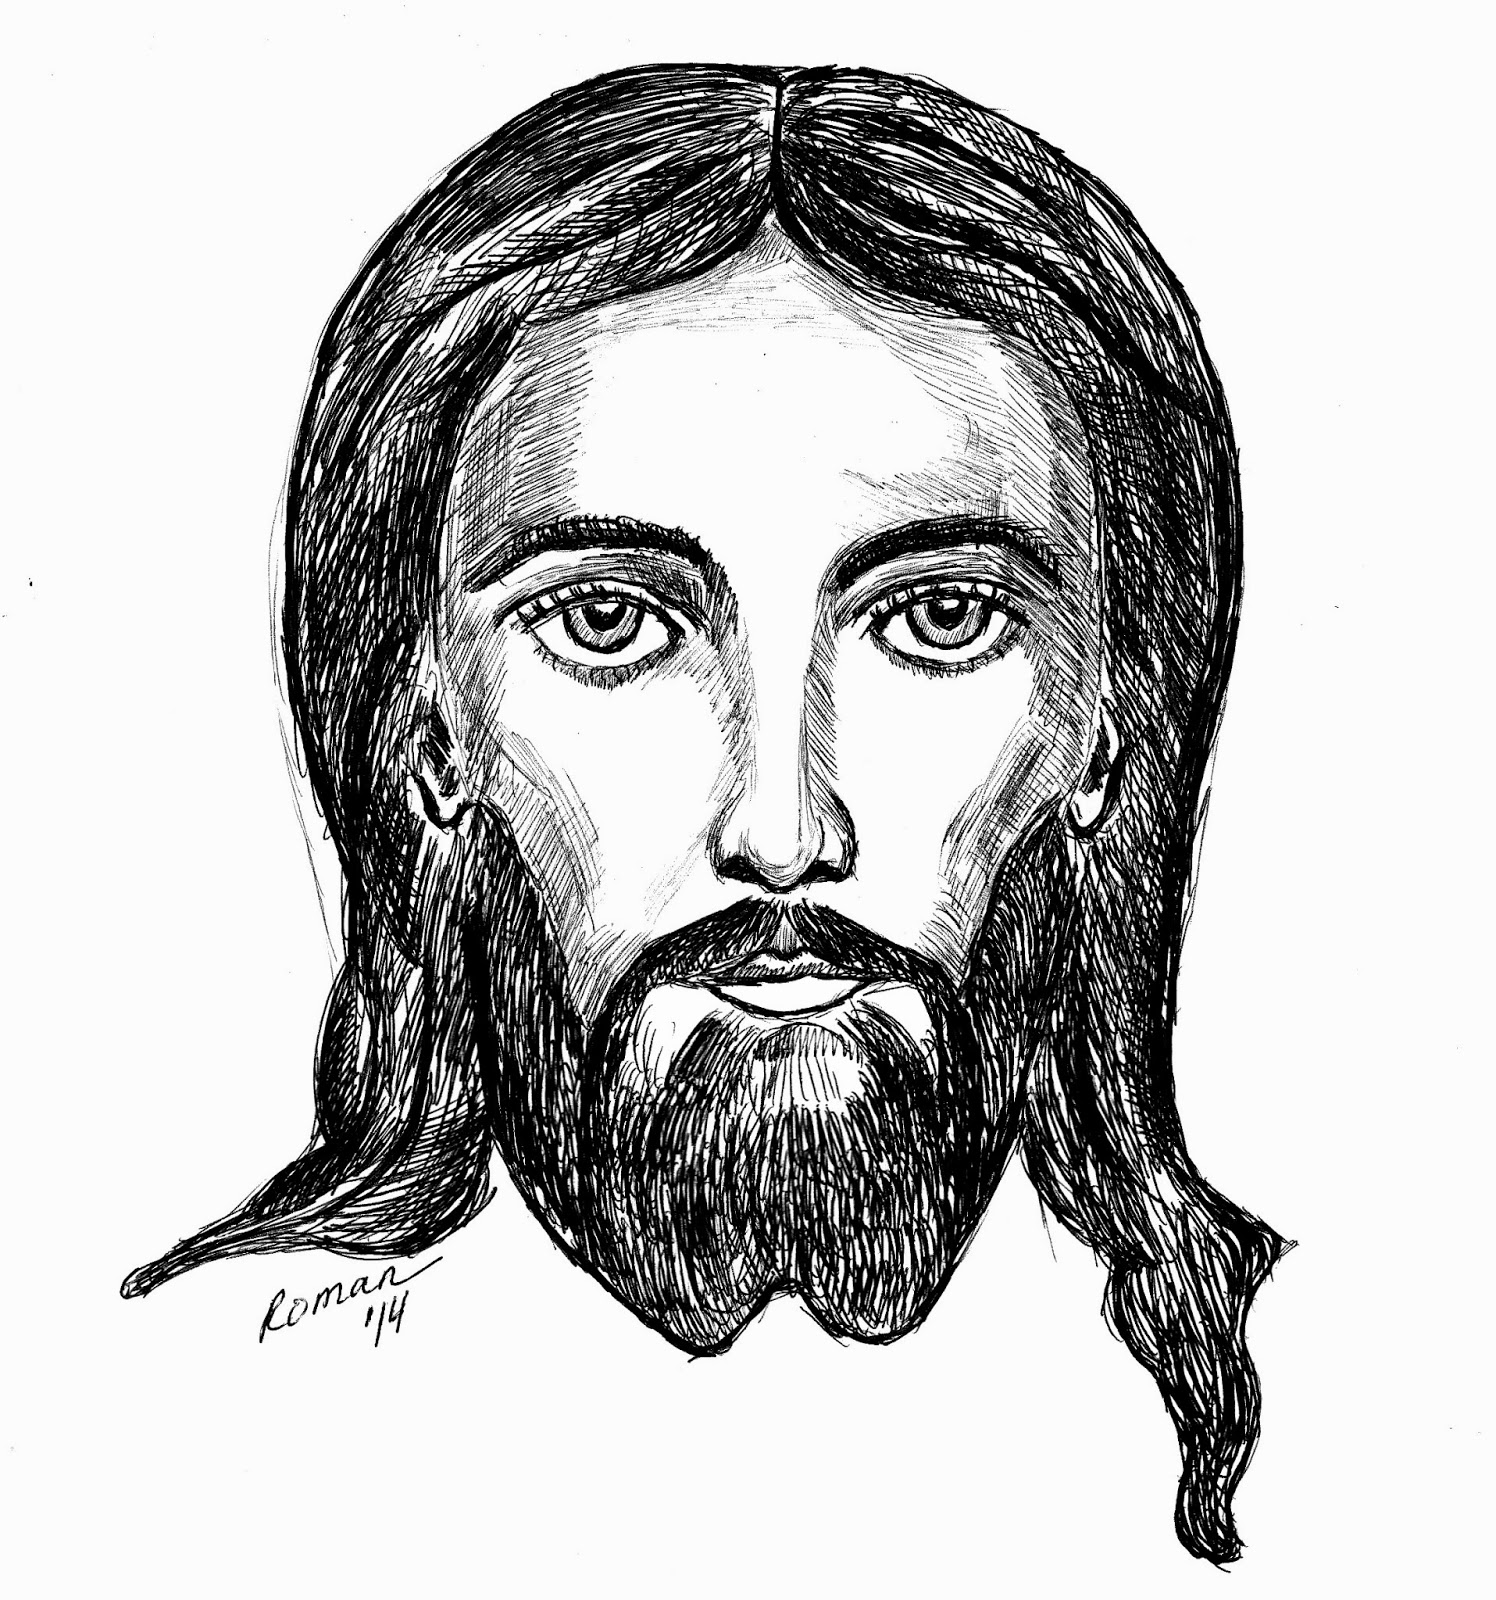 Spiritual health and living: My drawings of Jesus